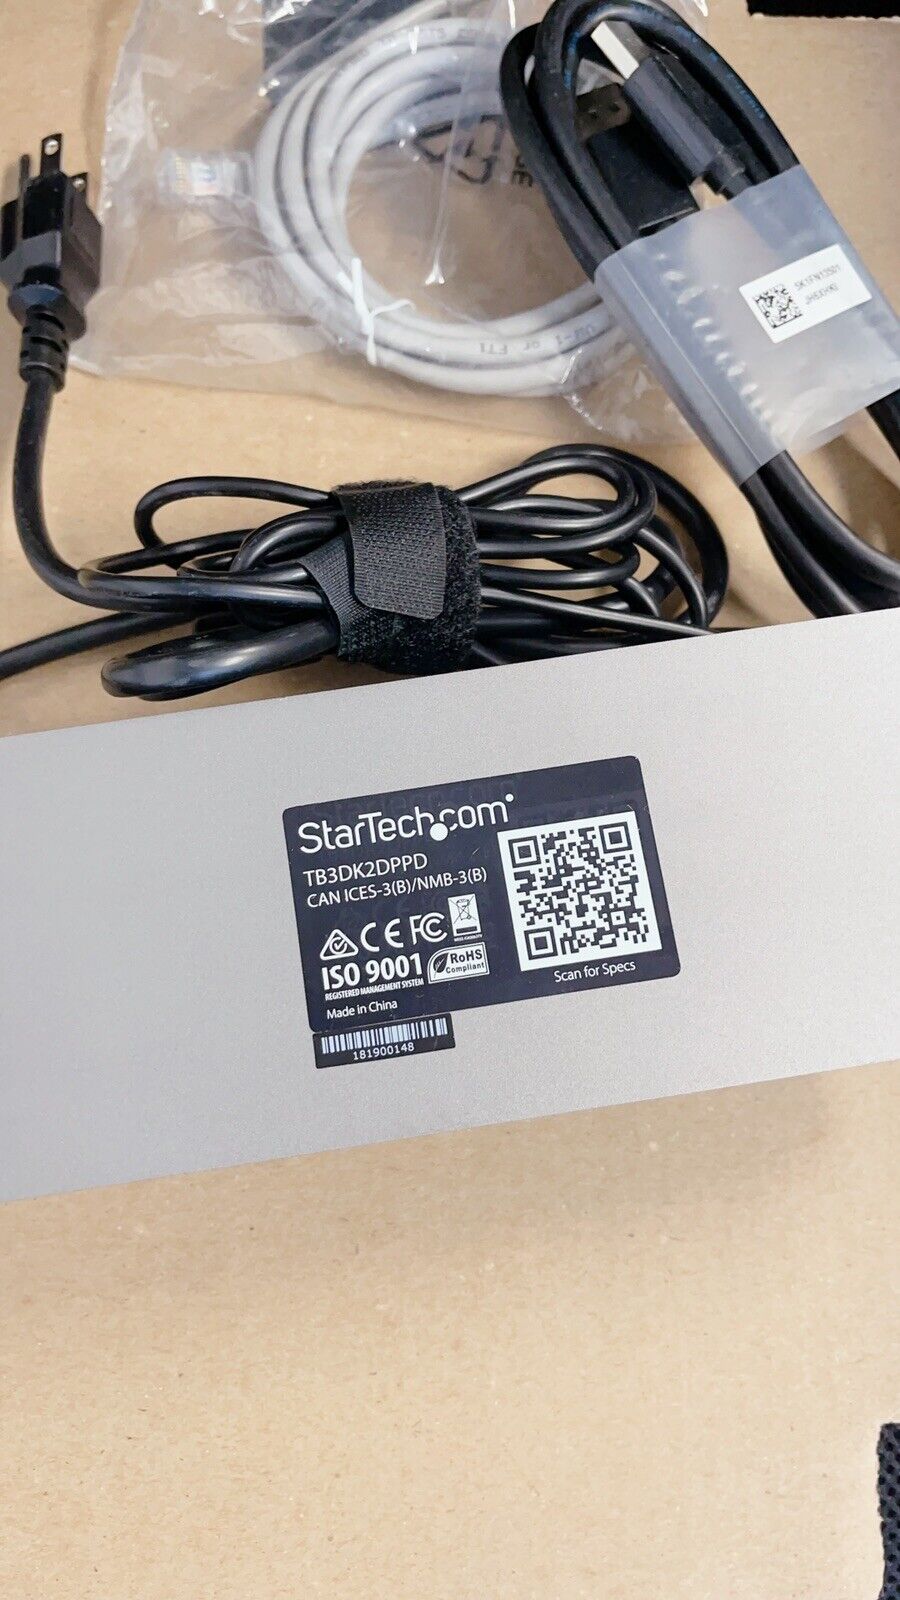 StarTech.COM TB3DK2DPPD Thunderbolt 3 Dock DisplayPort Docking Station +AC